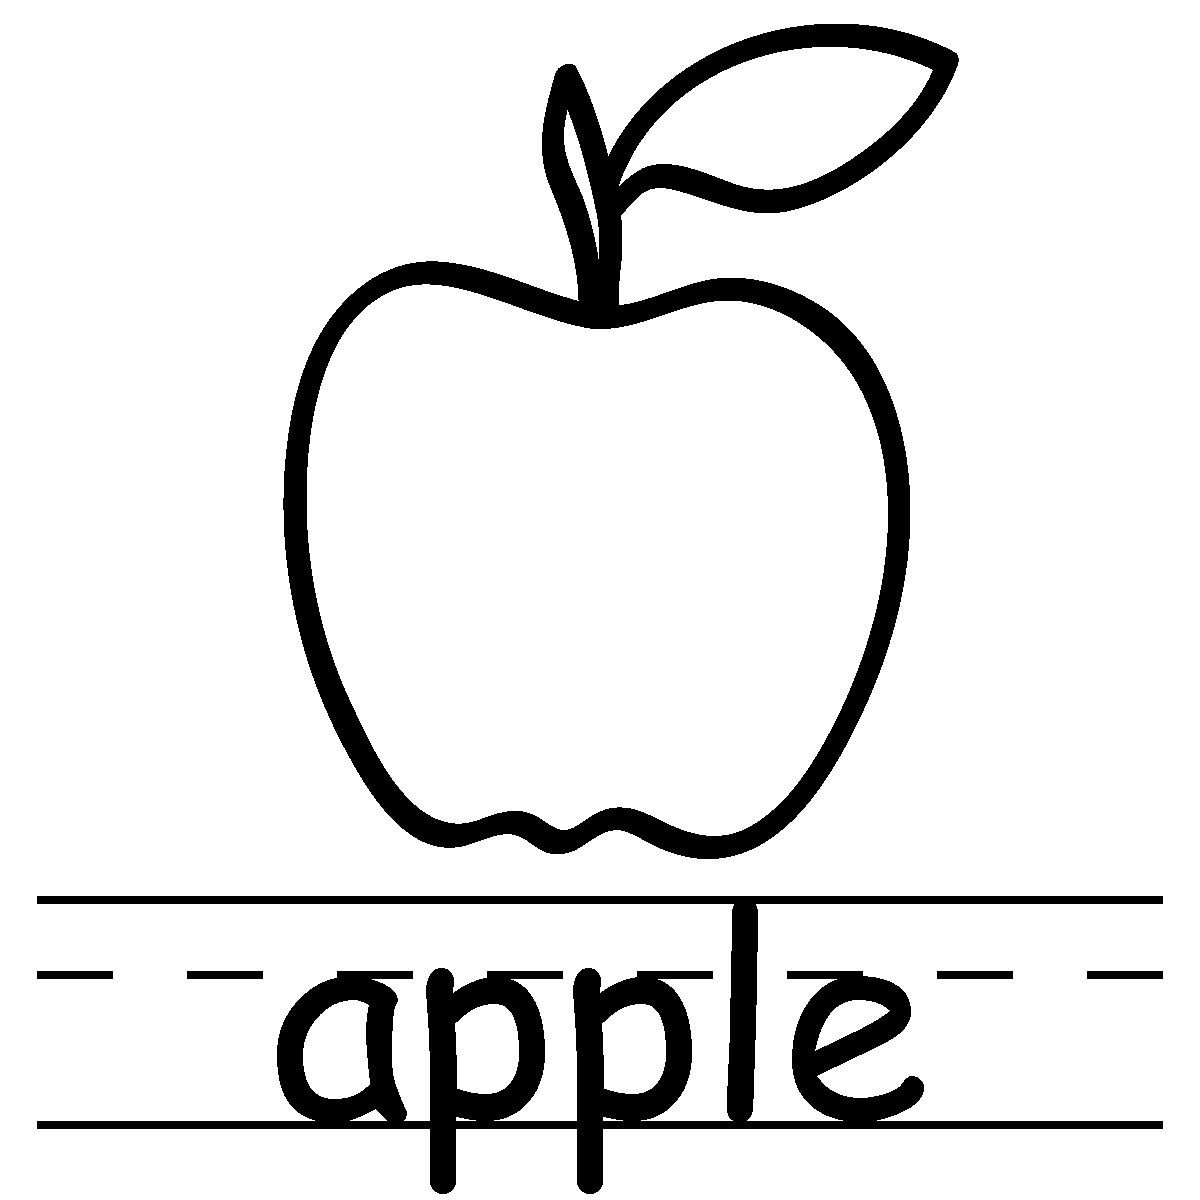 Apple clipart capital letter. Word clip art border